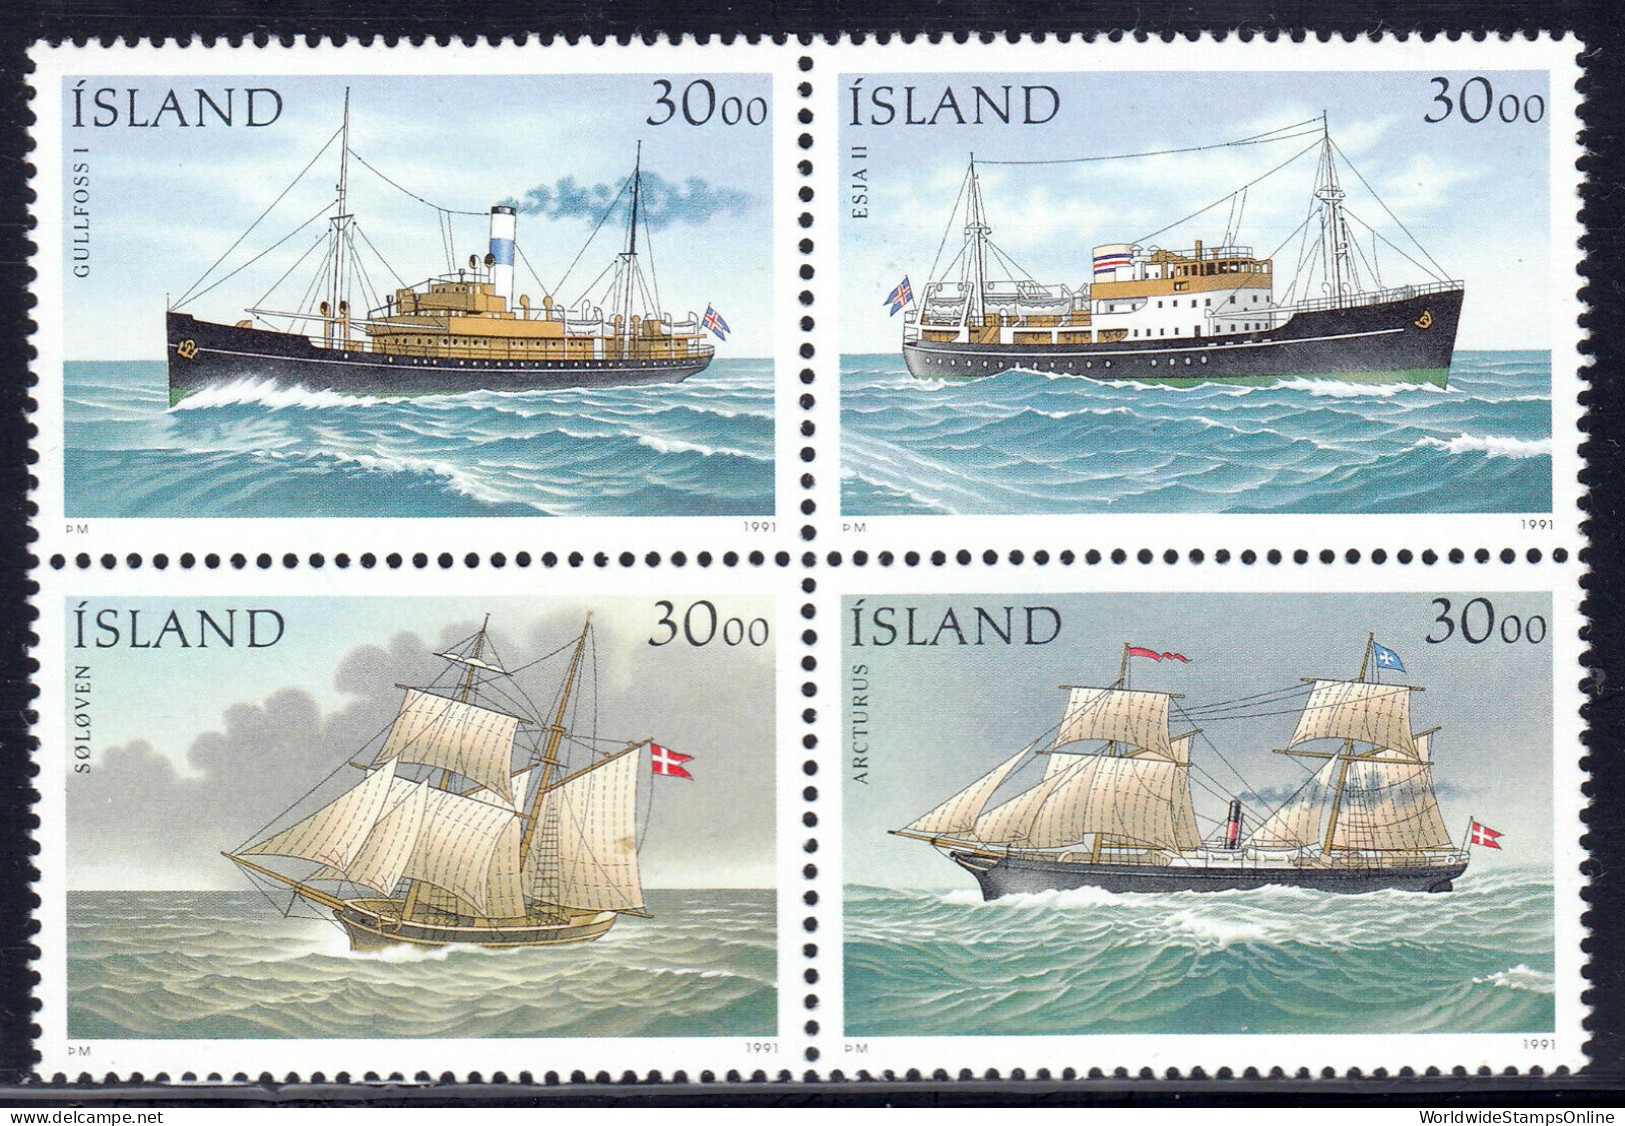 ICELAND — SCOTT 745 — 1991 SHIPS SE-TENANT SET — MNH — SCV $20 - Covers & Documents